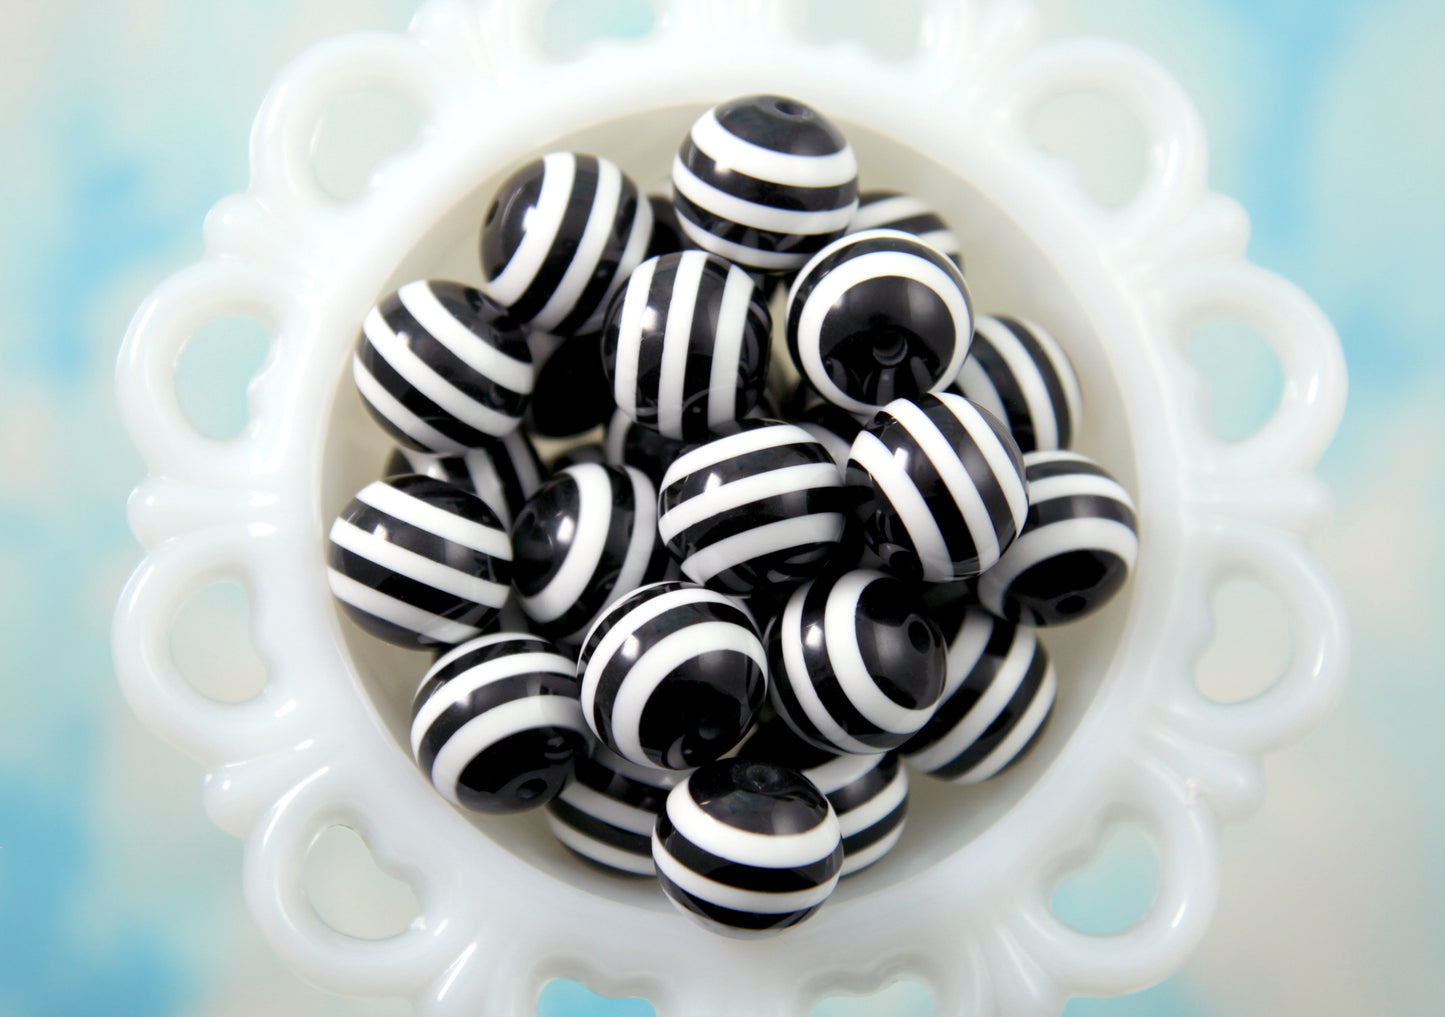 20mm Black and white striped bubblegum beads